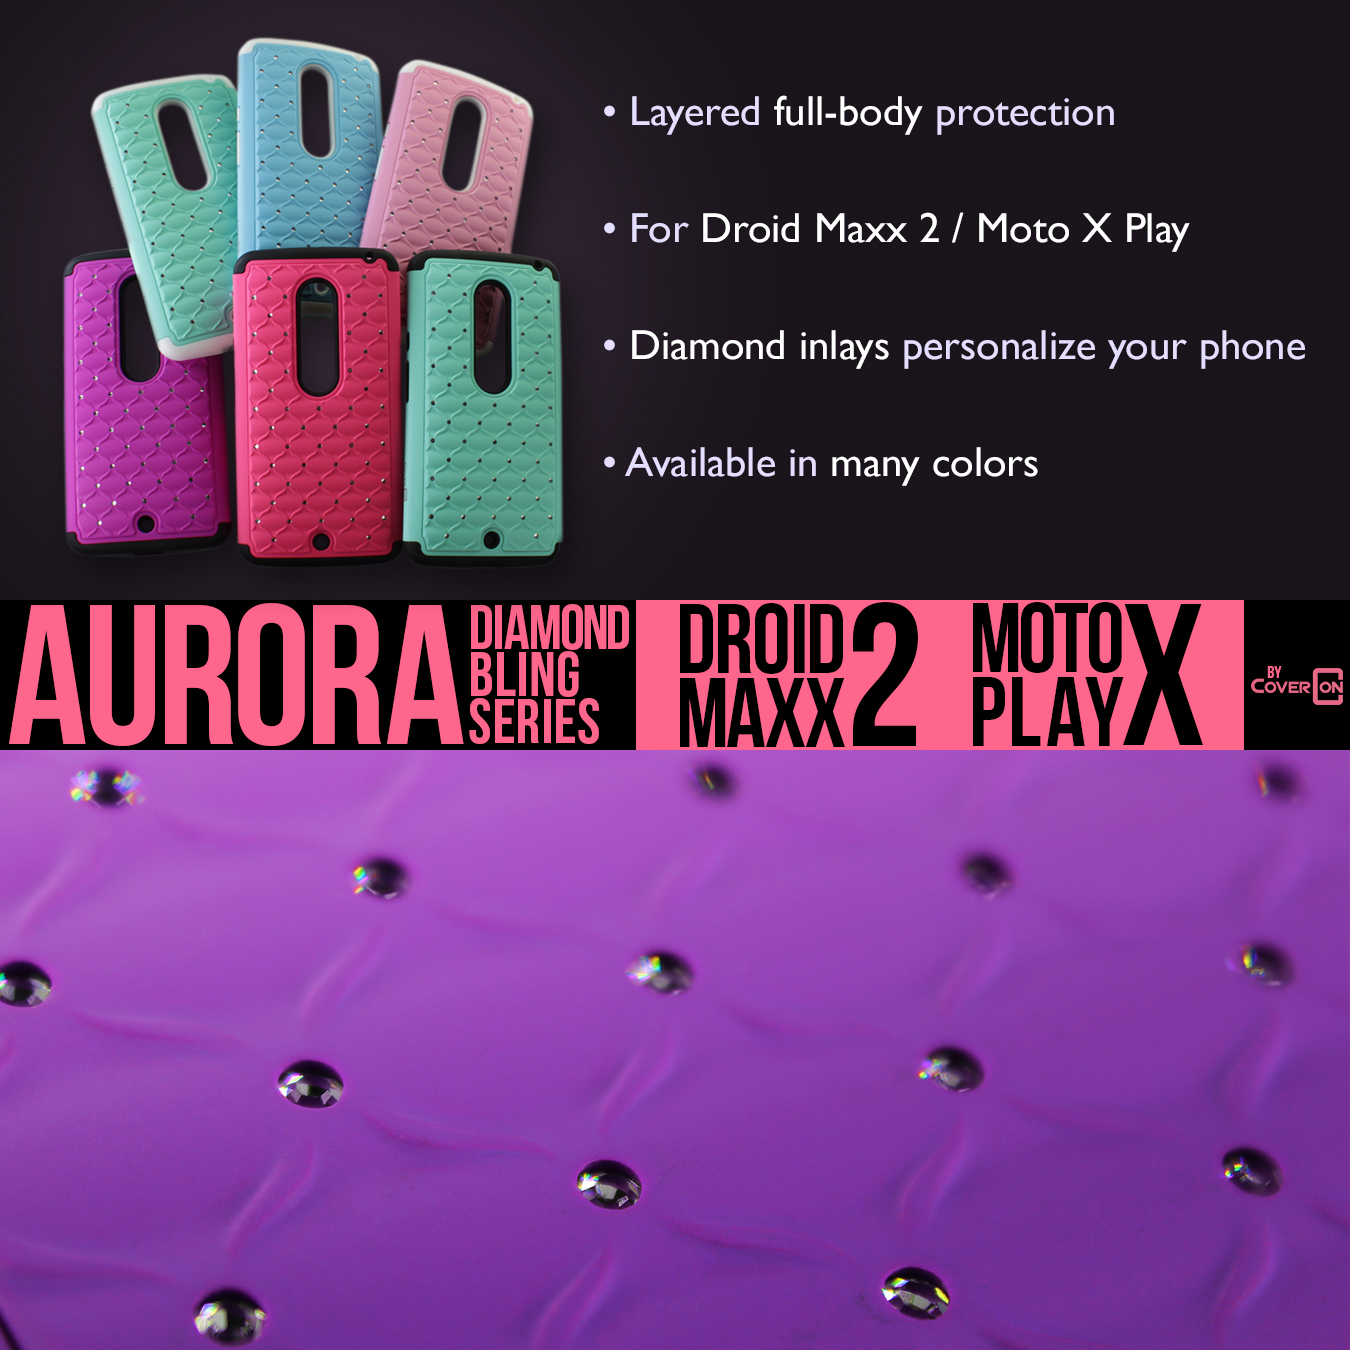 Motorola Droid Maxx 2 / Moto X Play Cases